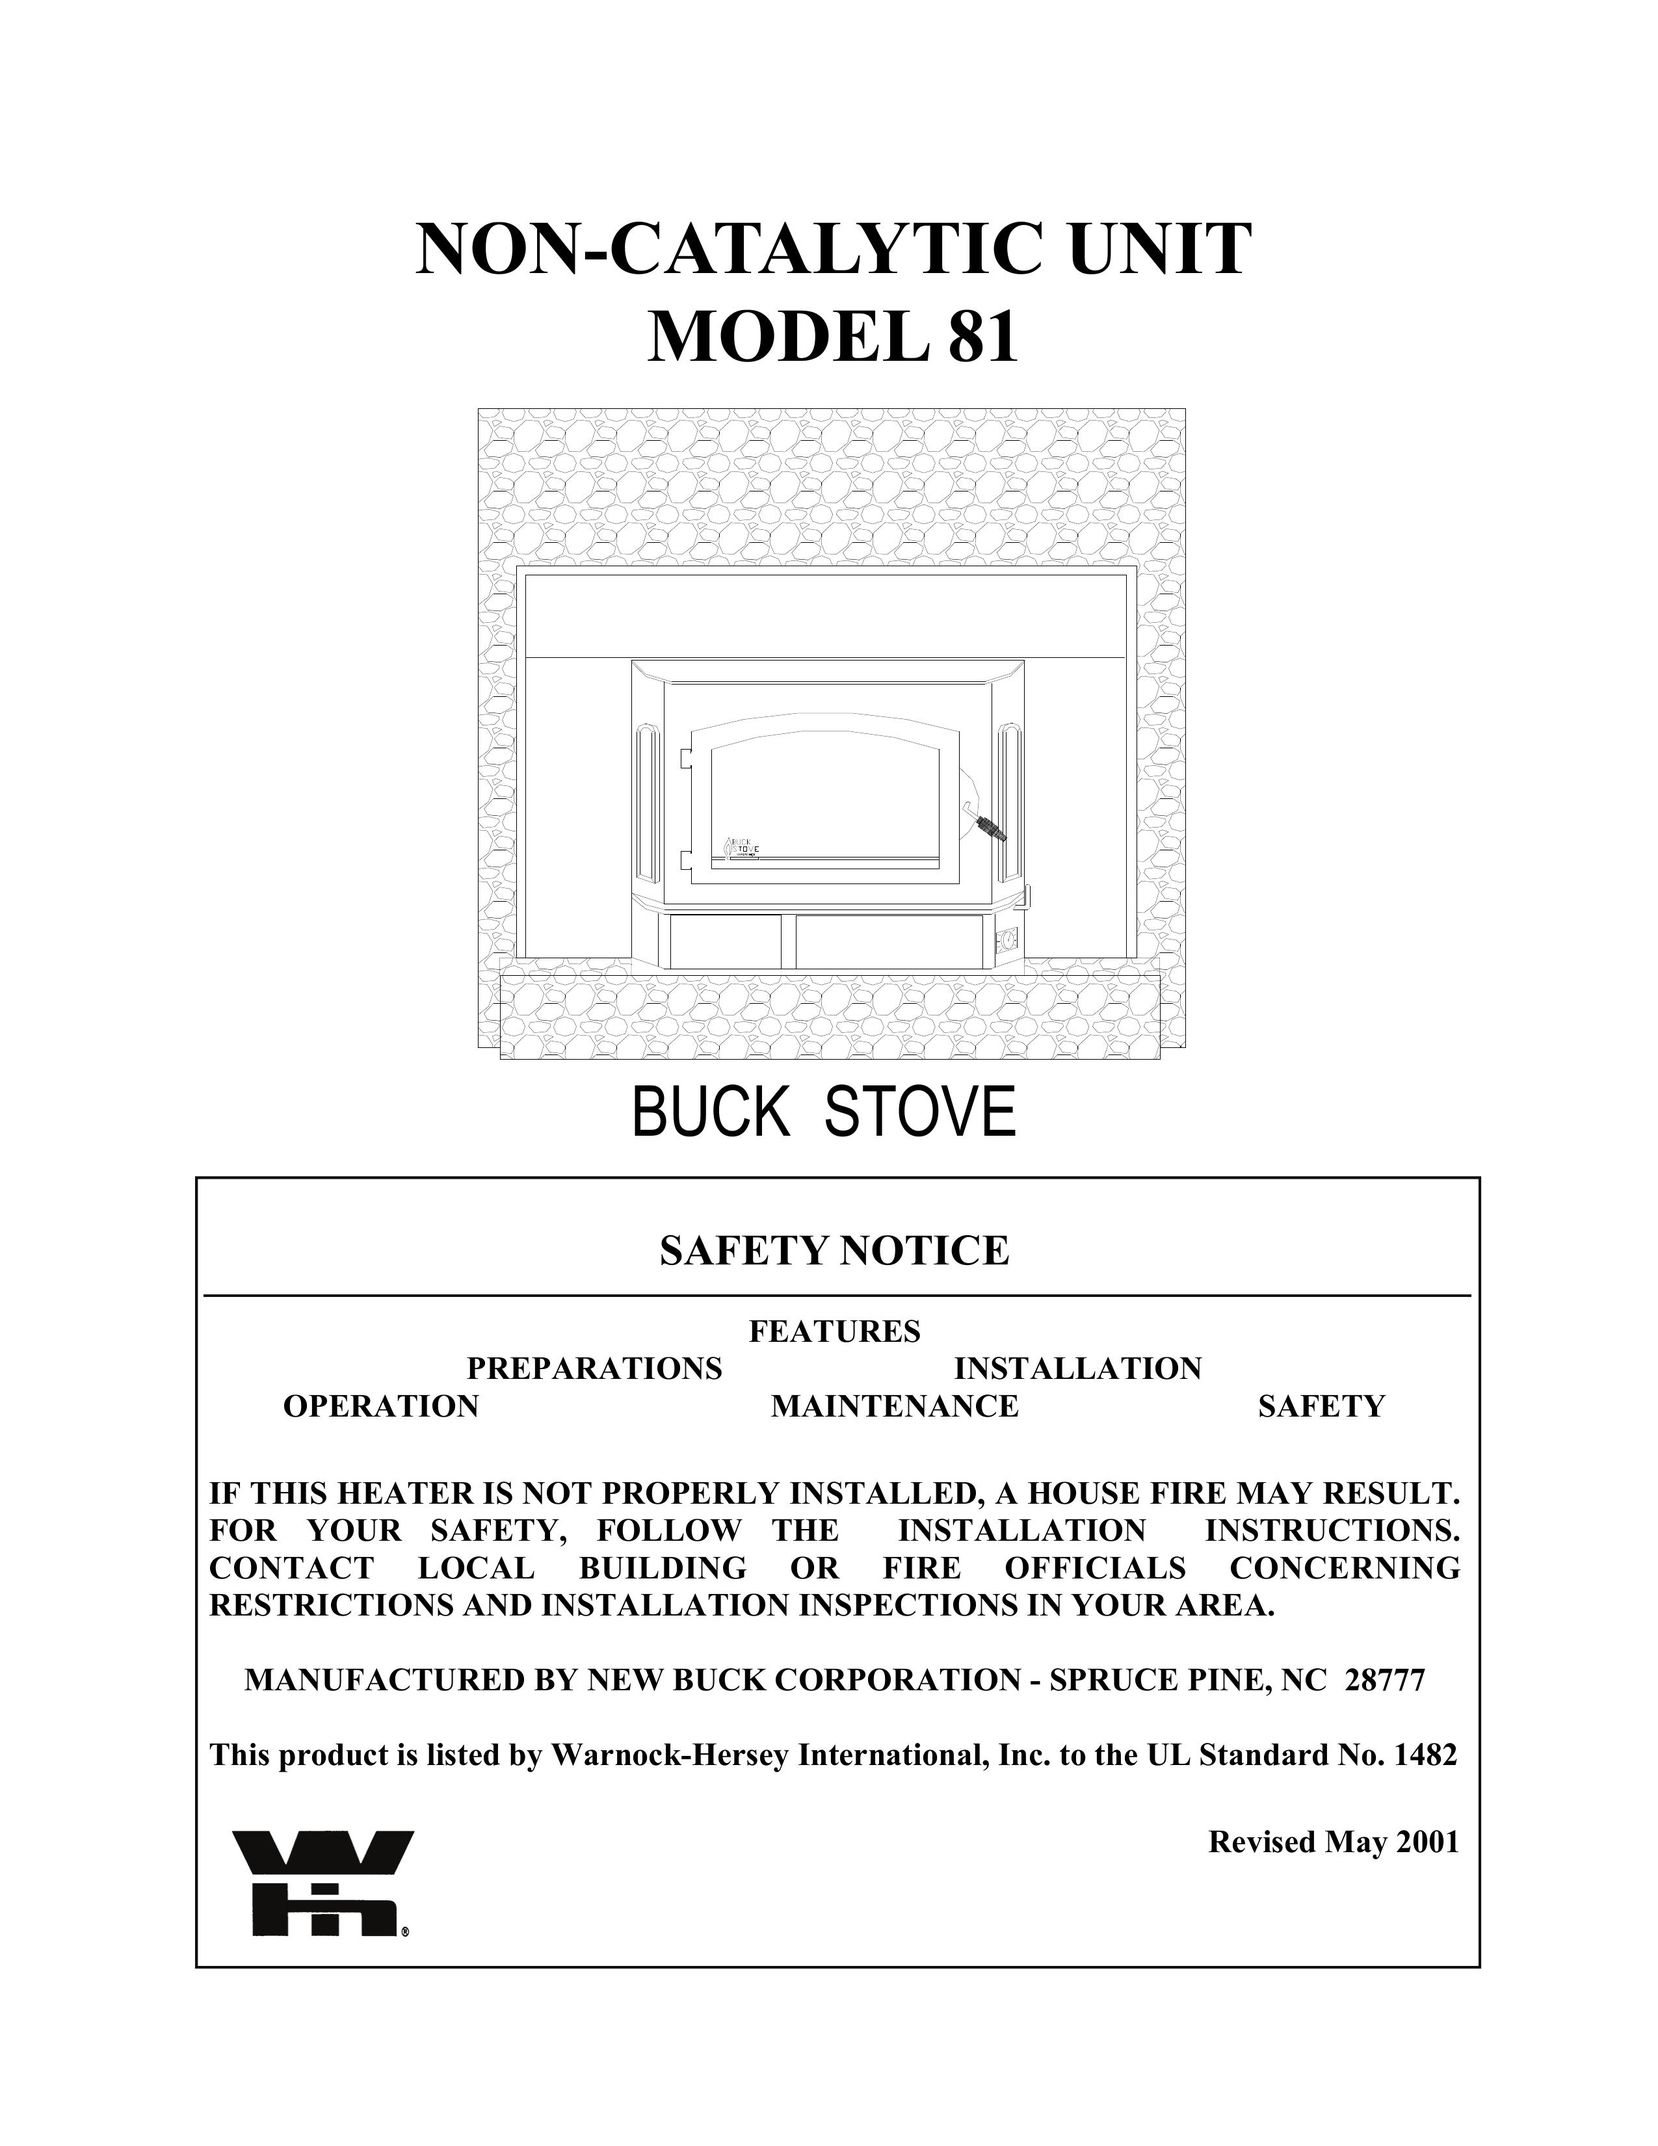 New Buck Corporation 81 Indoor Fireplace User Manual